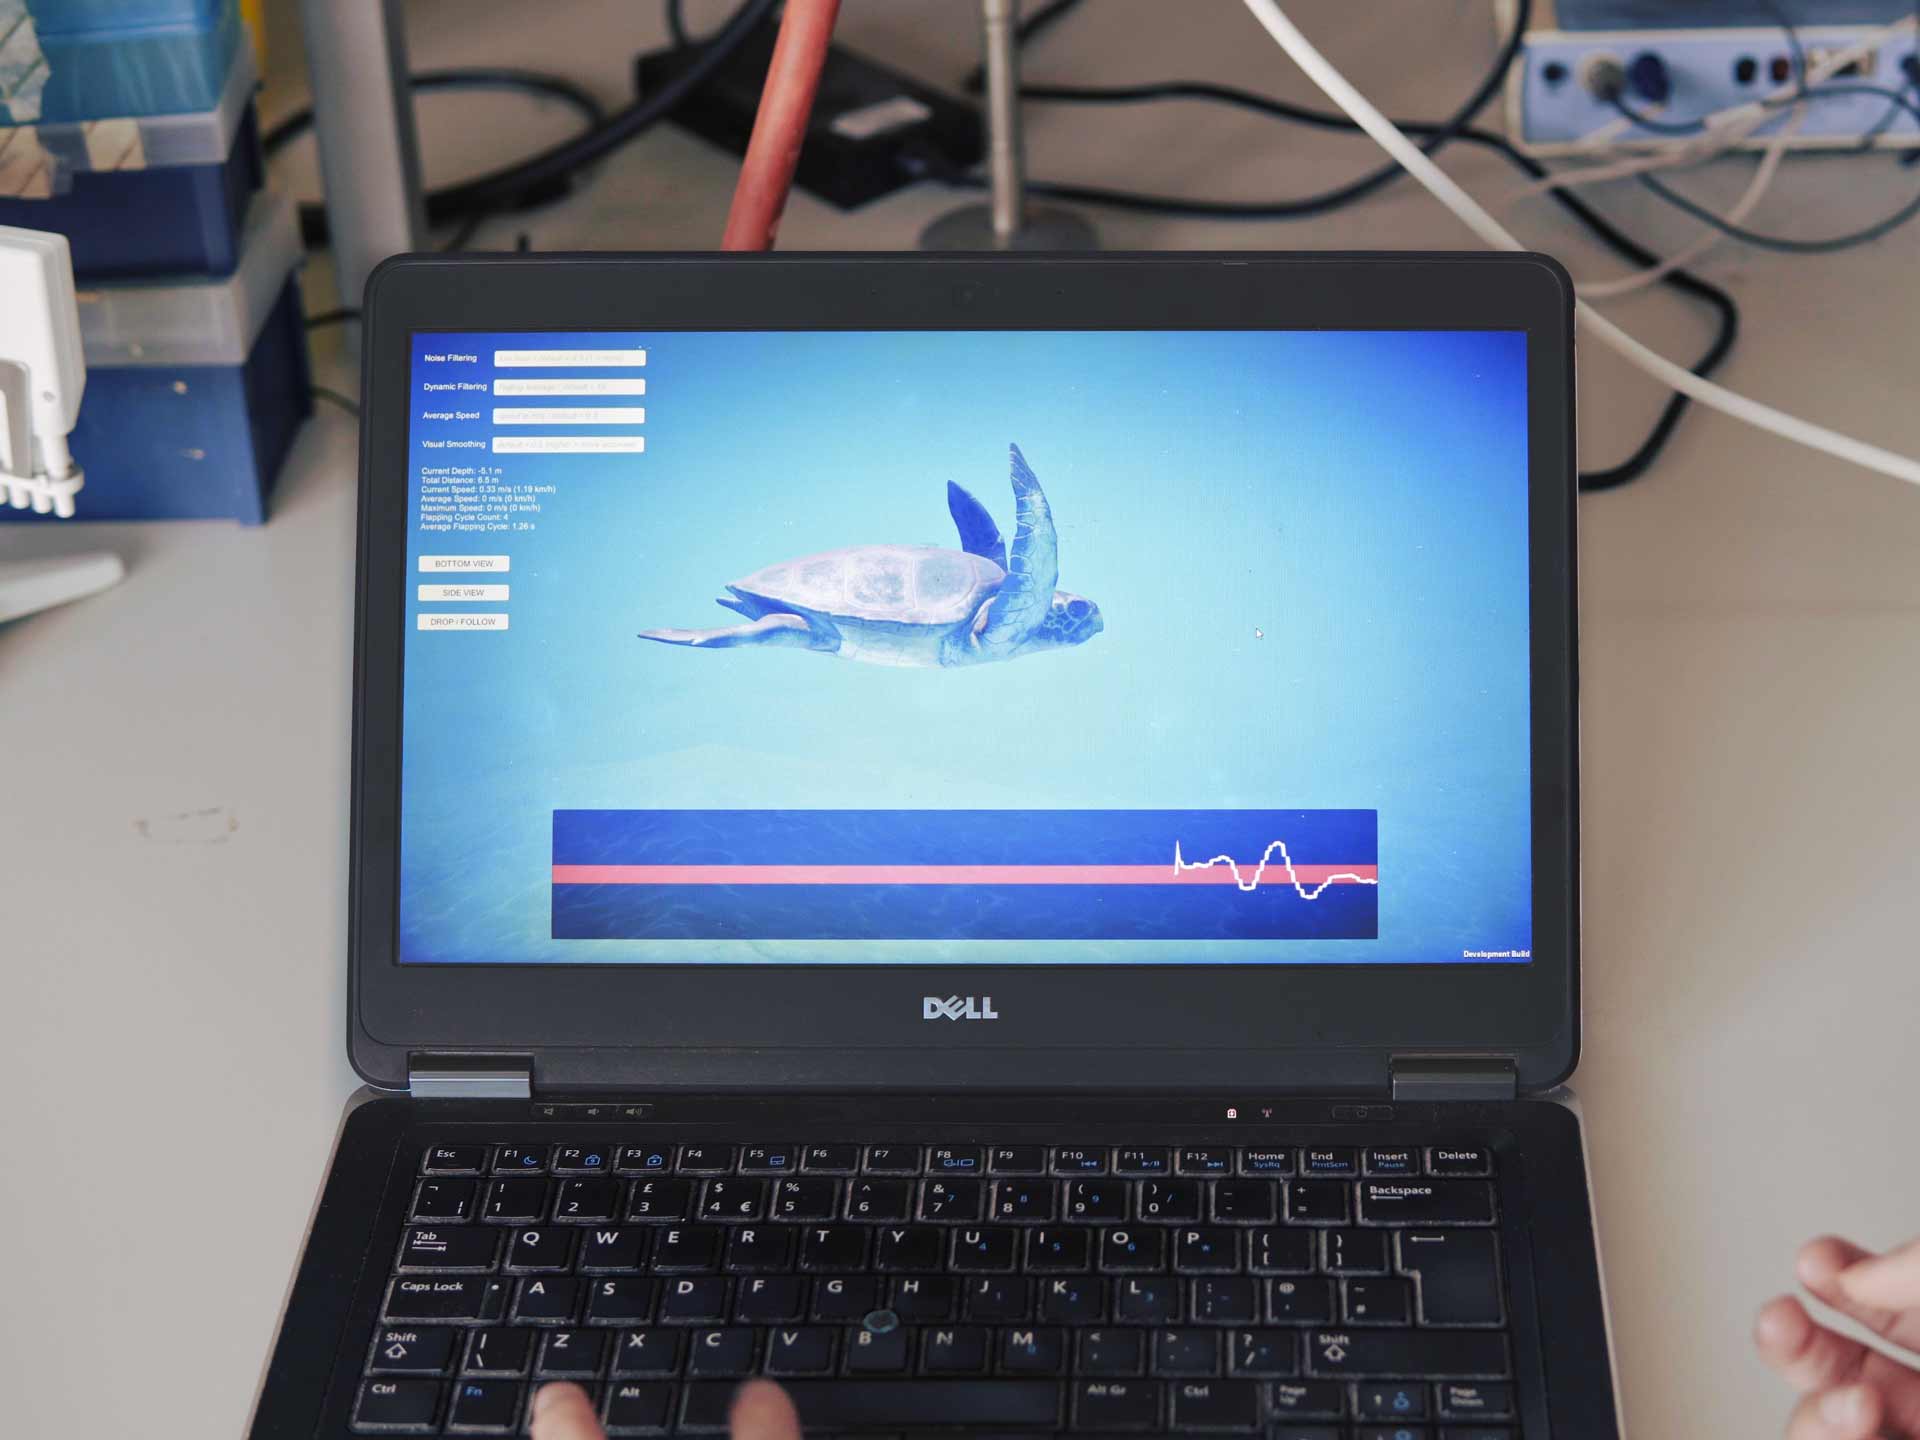 Atlantis 3D turtle simulation on a laptop screen